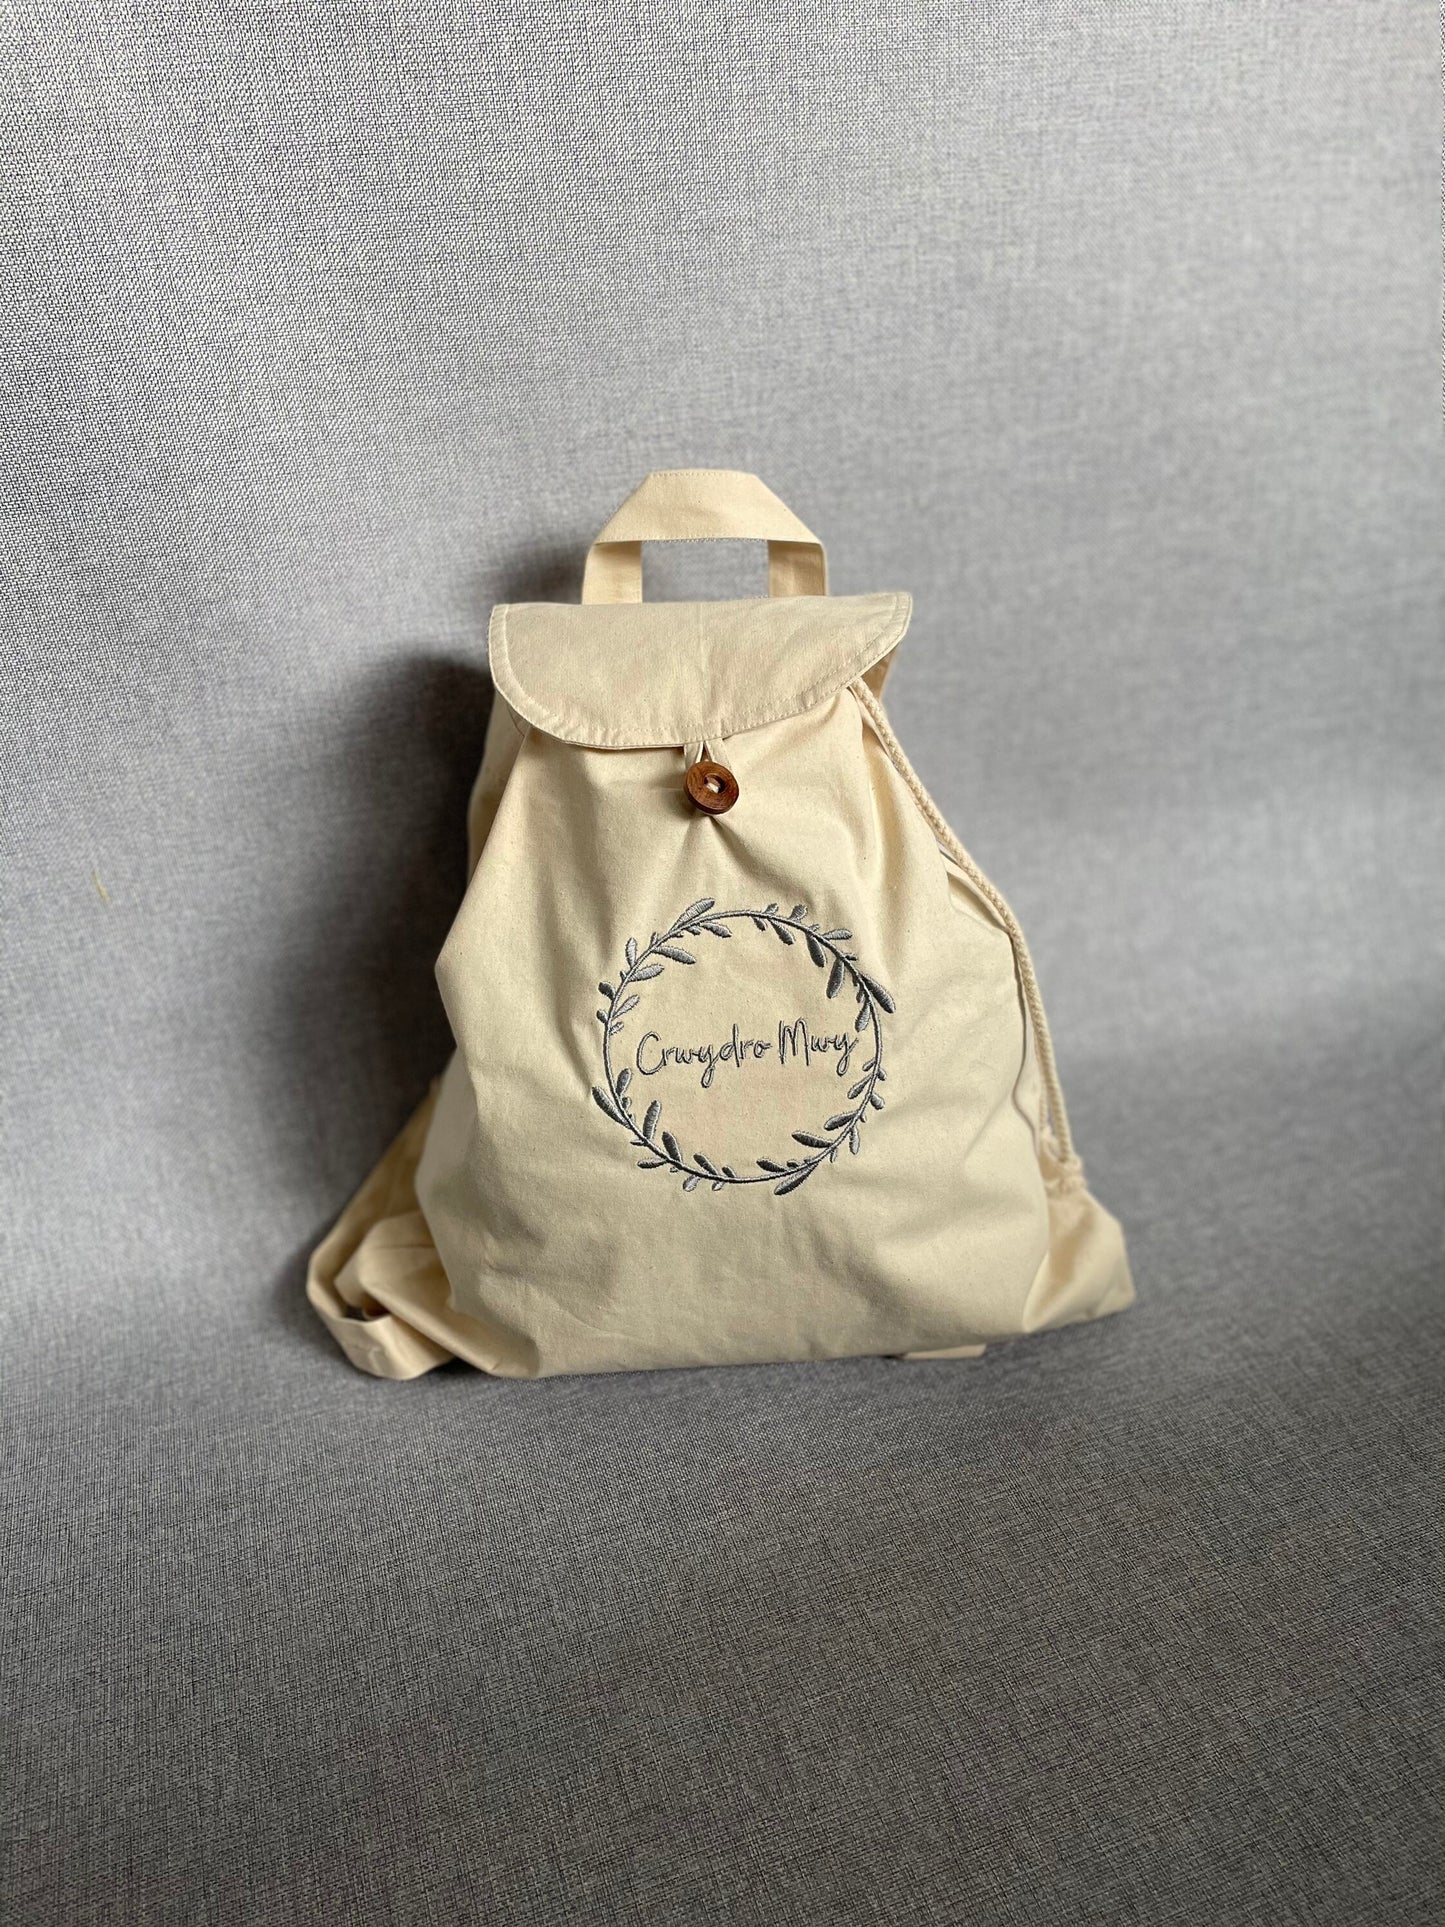 Crwydro Mwy (Wander More) cotton drawstring backpack. Welsh language